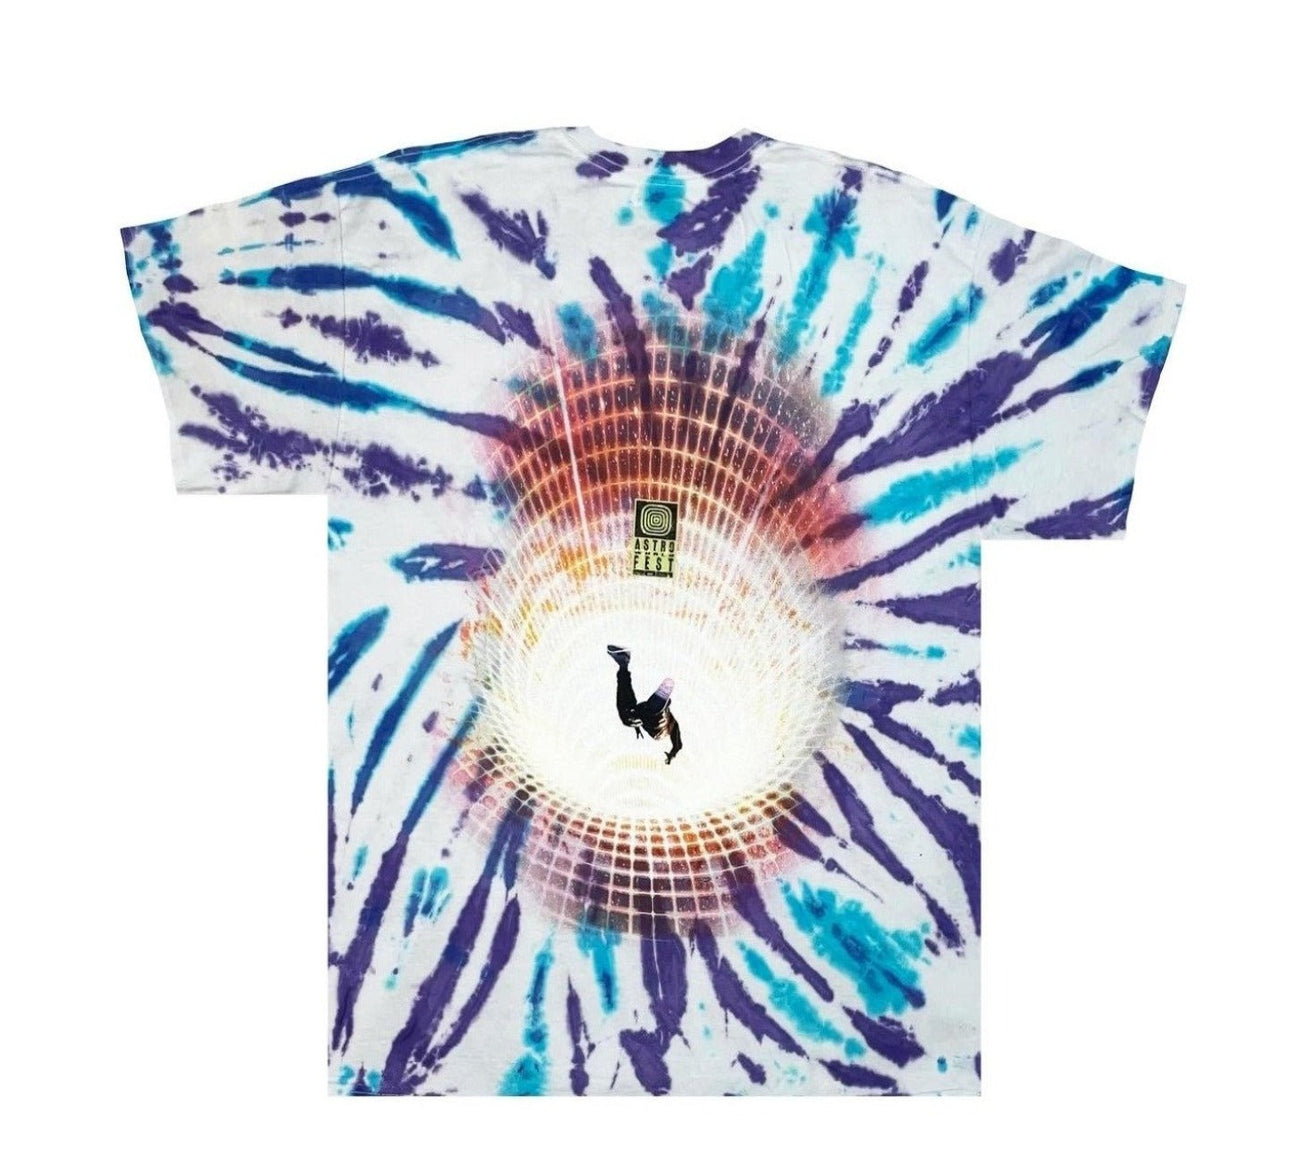 Travis Scott Astroworld Festival 2021 camiseta teñida con llamas